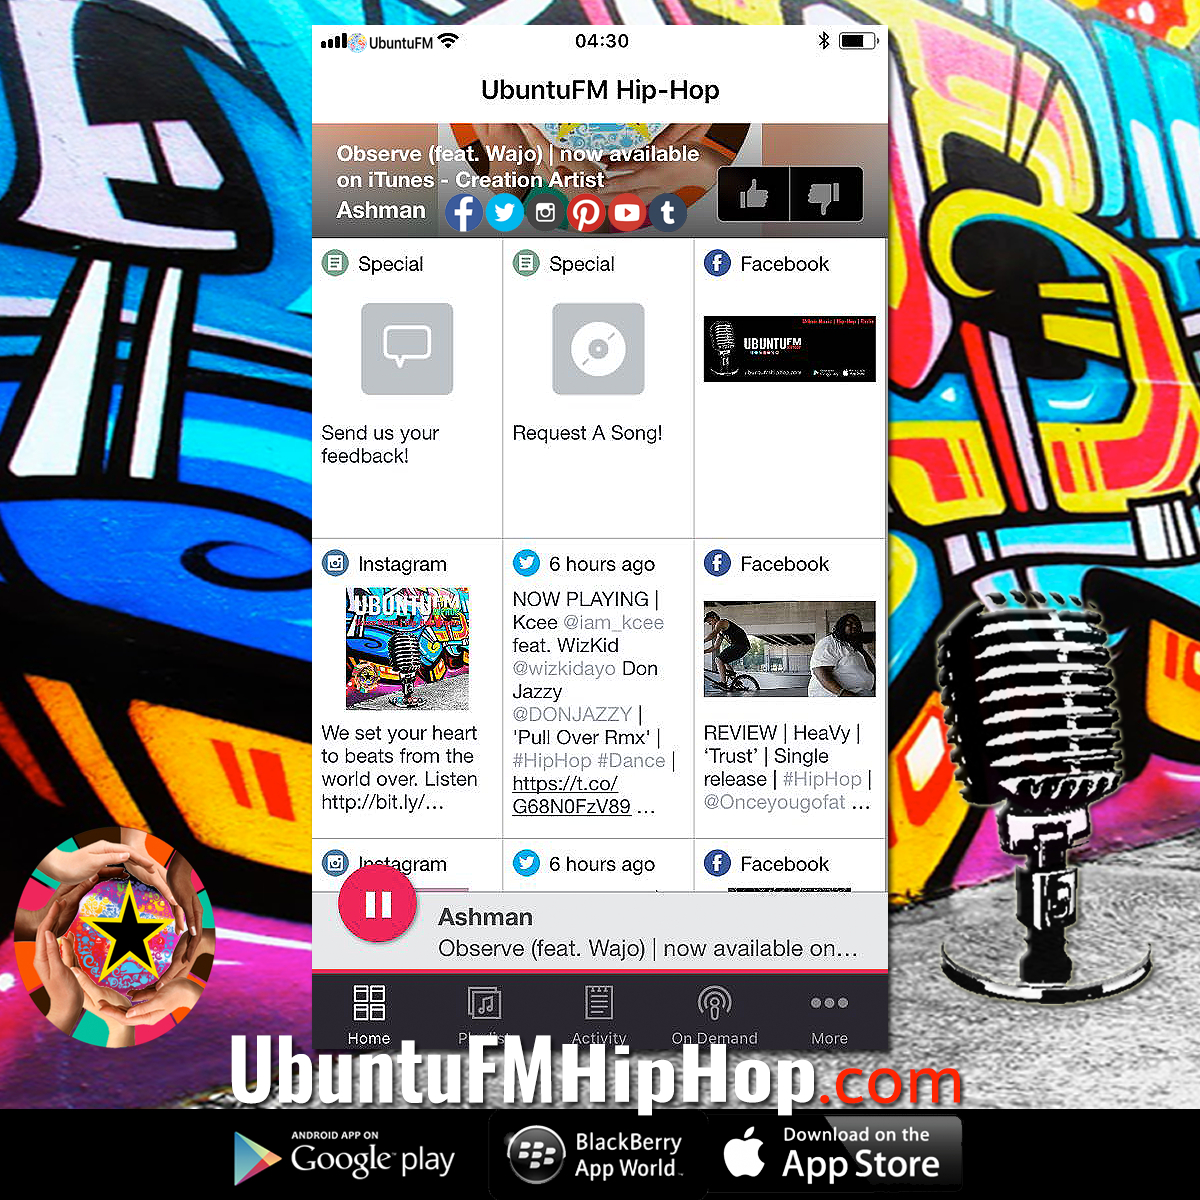 FREE UbuntuFM Hip-Hop Radio apps